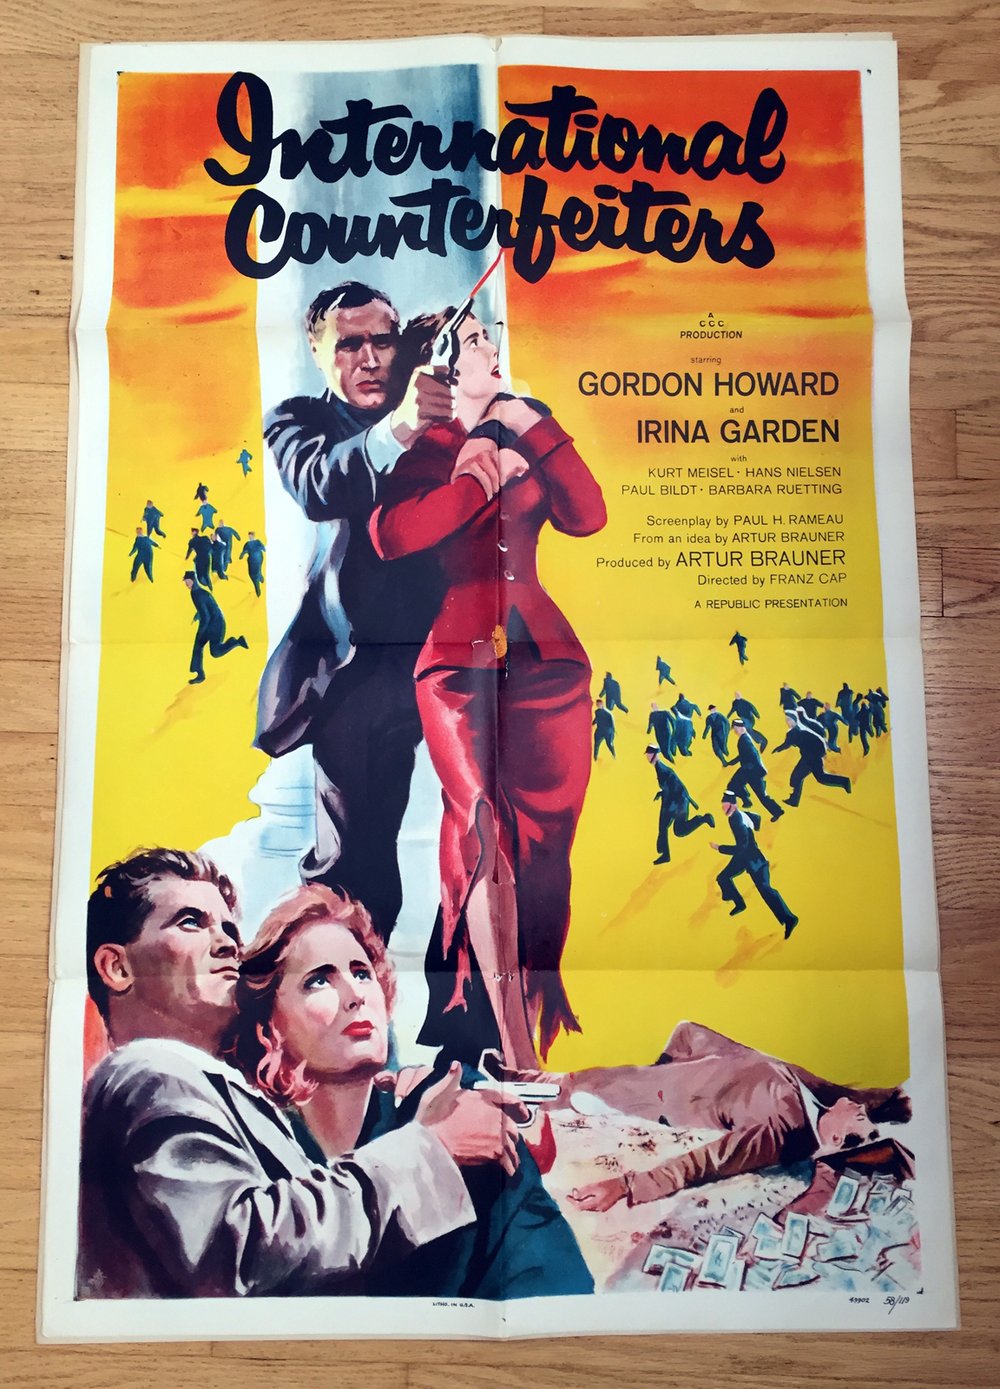 1952 INTERNATIONAL COUNTERFEITERS Original U.S. One Sheet Movie Poster